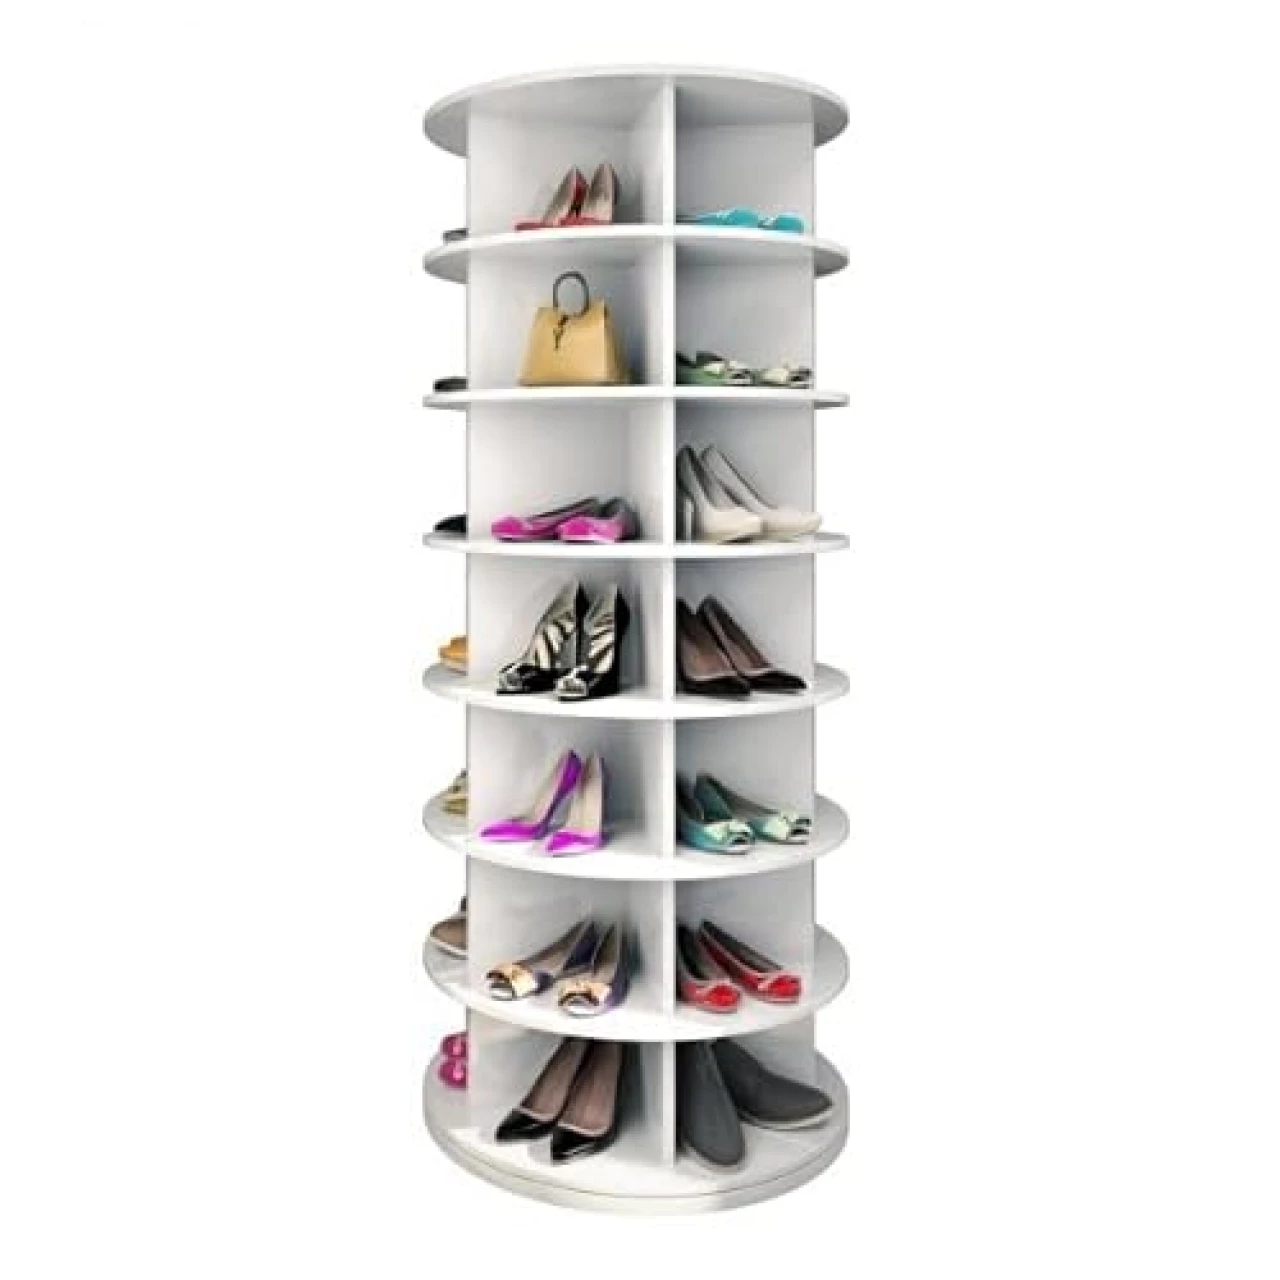 Weinstein storage Rotating shoe rack 360° original, Spinning shoe rack, original 7-tier hold over 35 pairs of shoes, Rotating shoe rack tower, Lazy susan, Reloving, Shoe rack